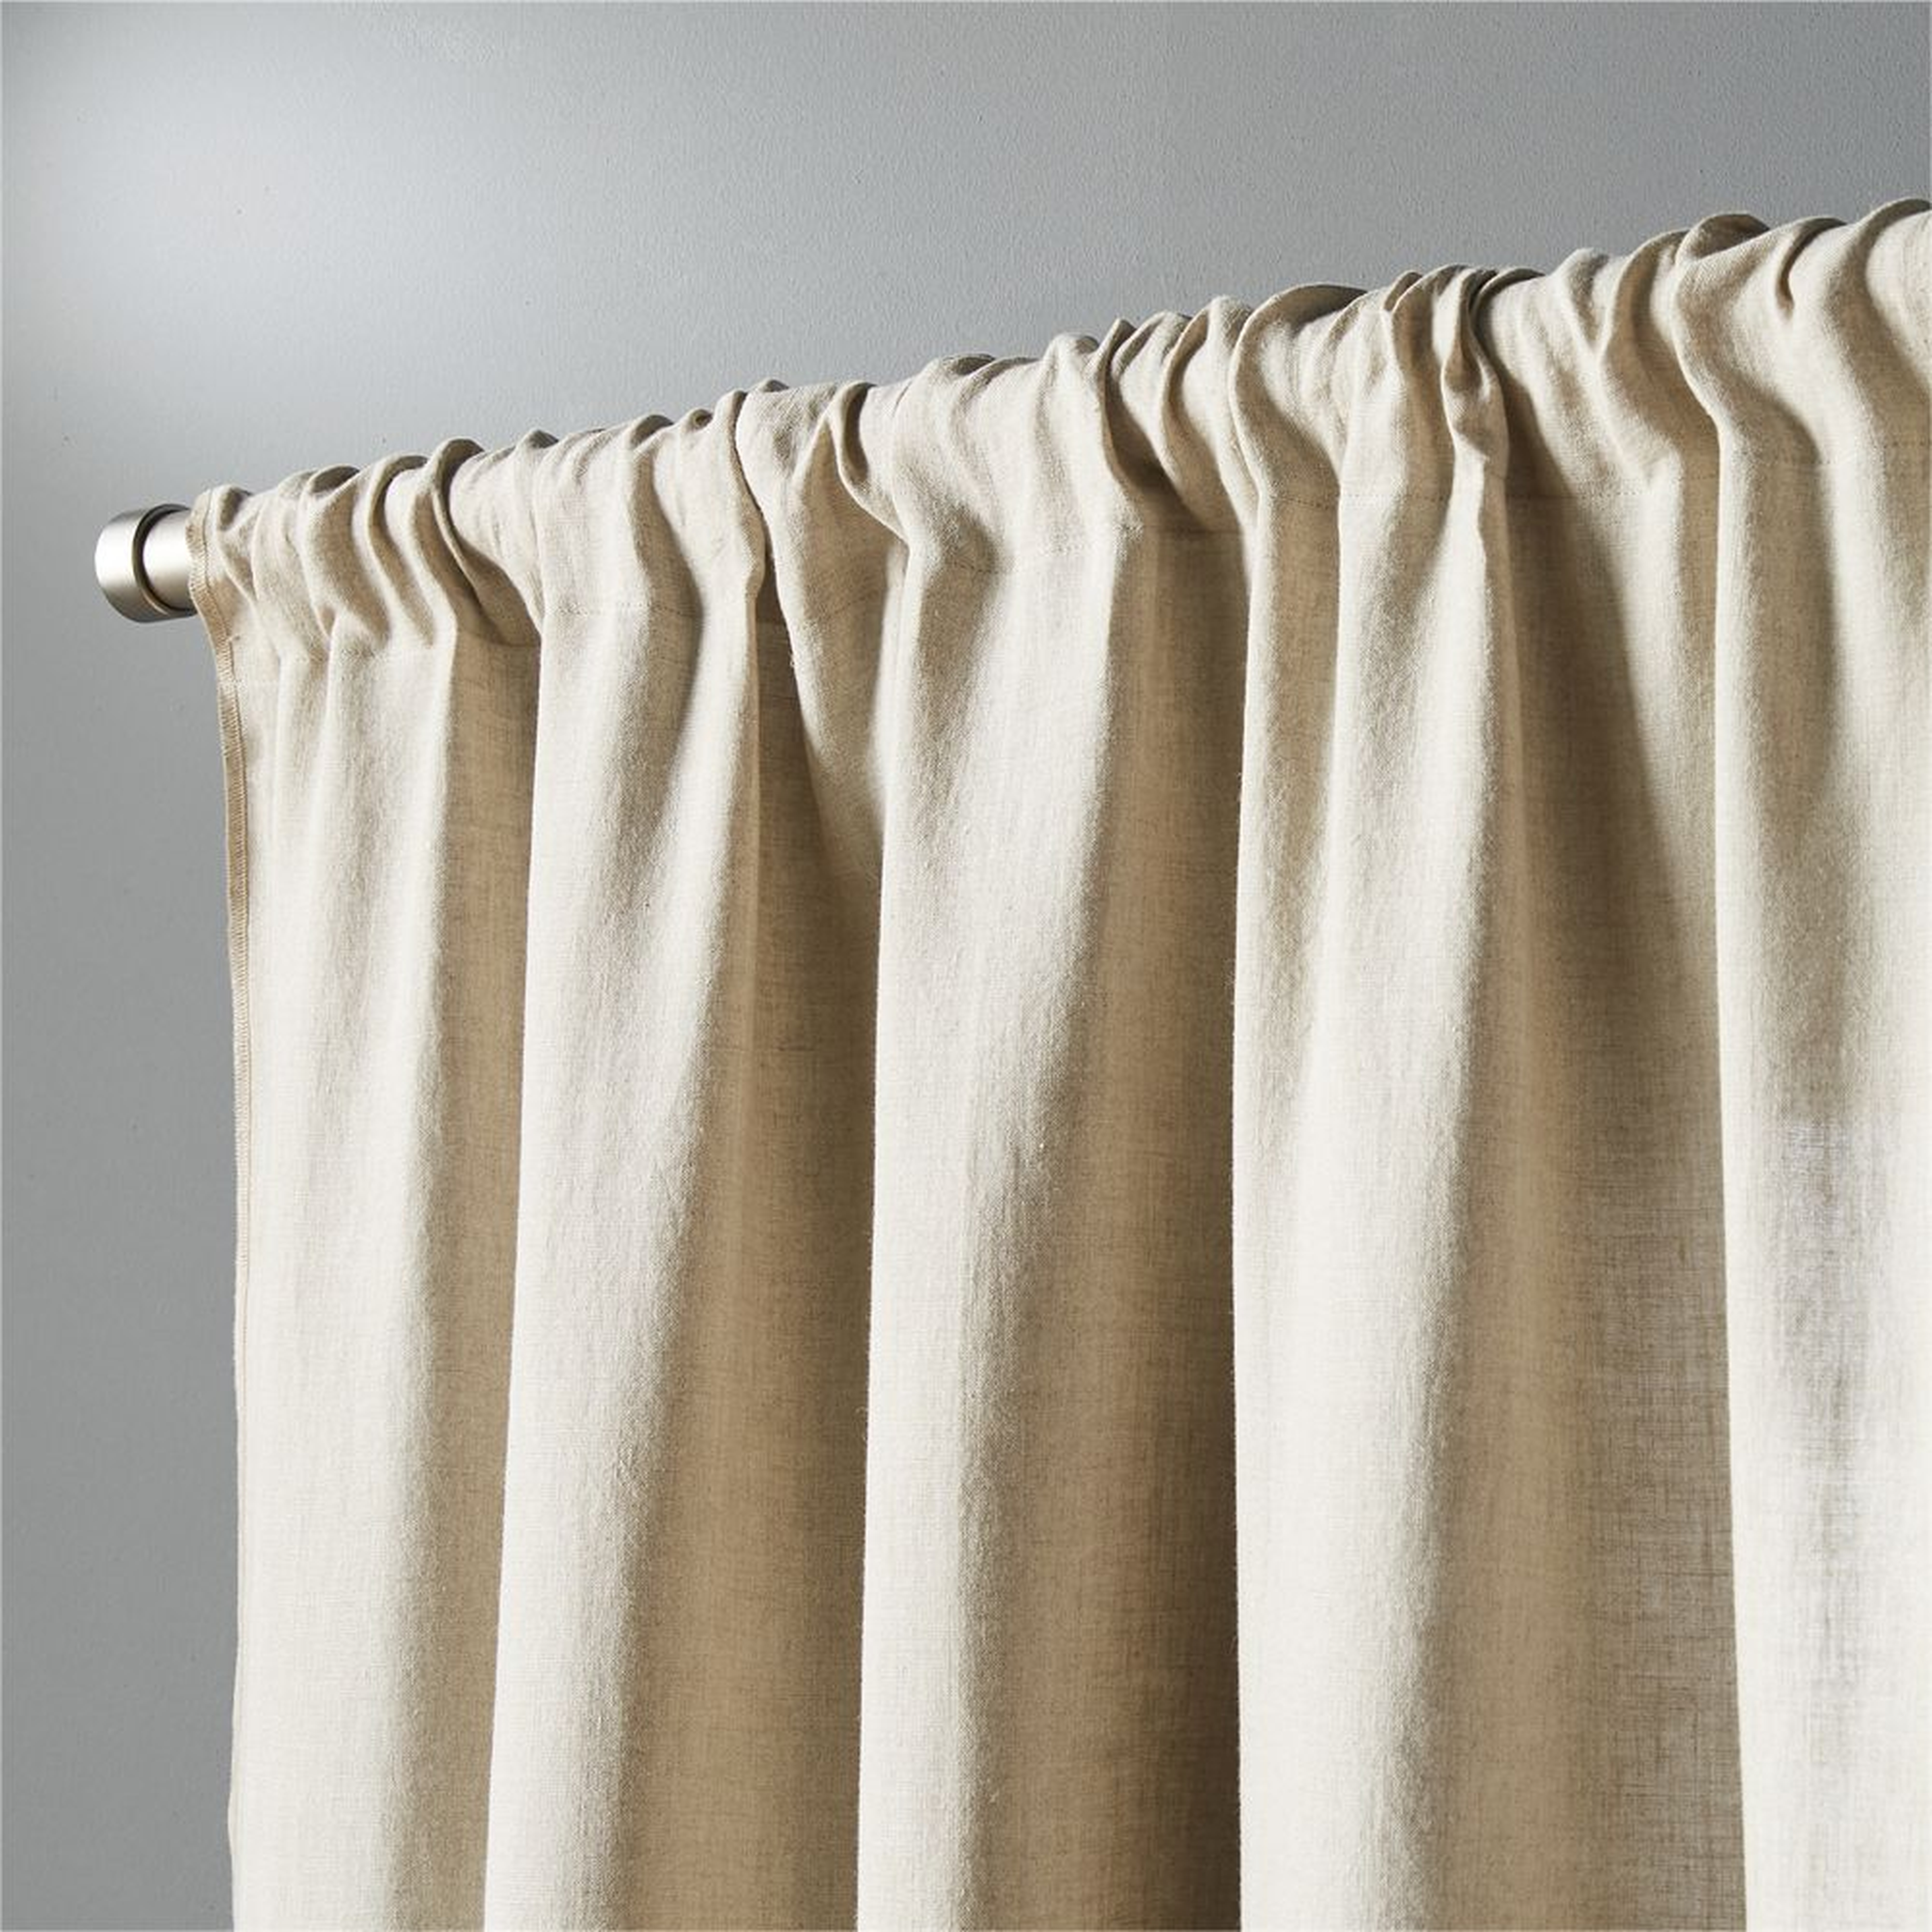 "natural linen curtain panel 48""x108""" - CB2